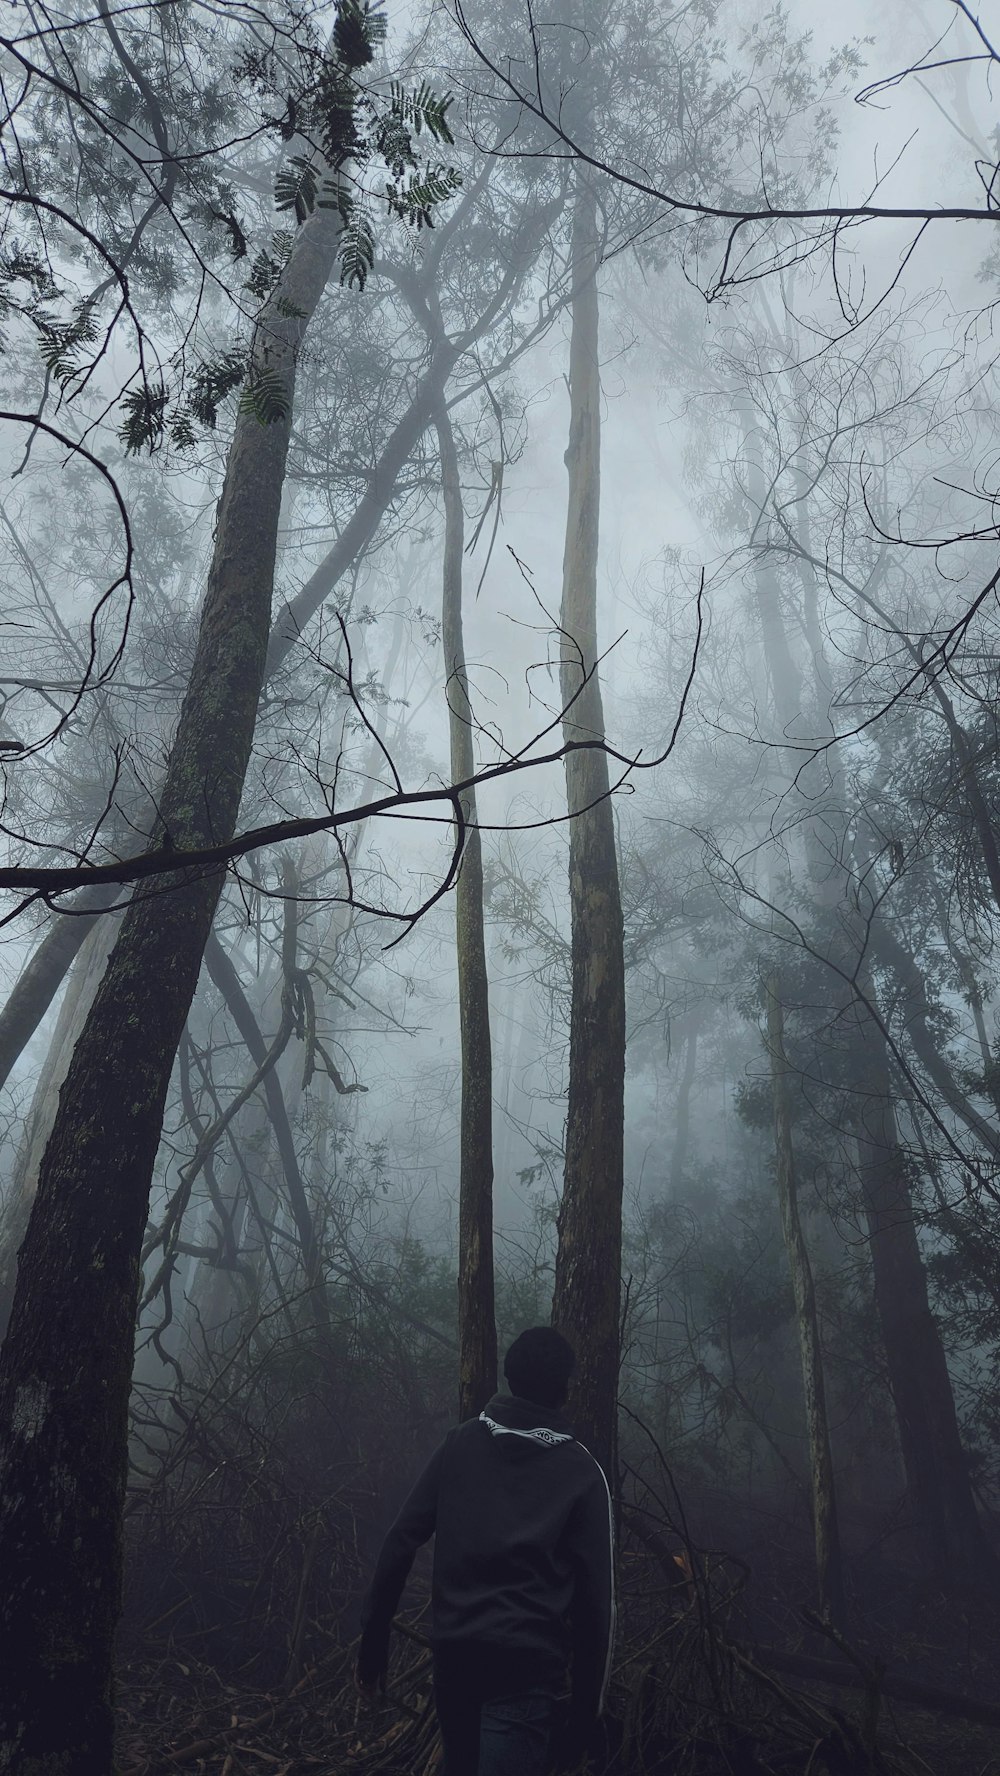 a man walking through a forest on a foggy day